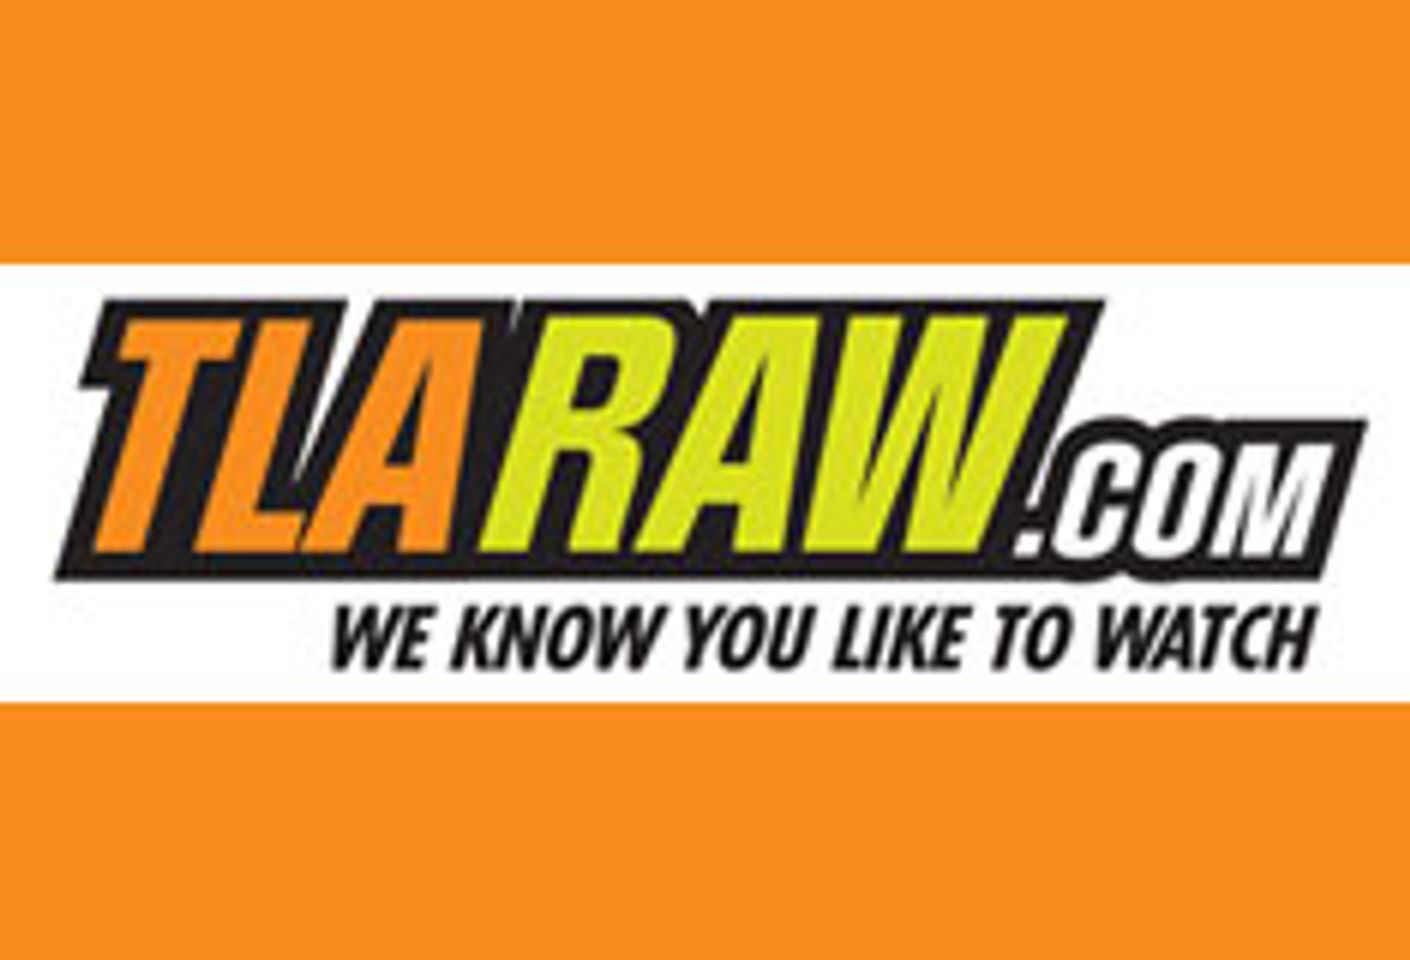 TLARAW.com Launches Annual Raw Awards